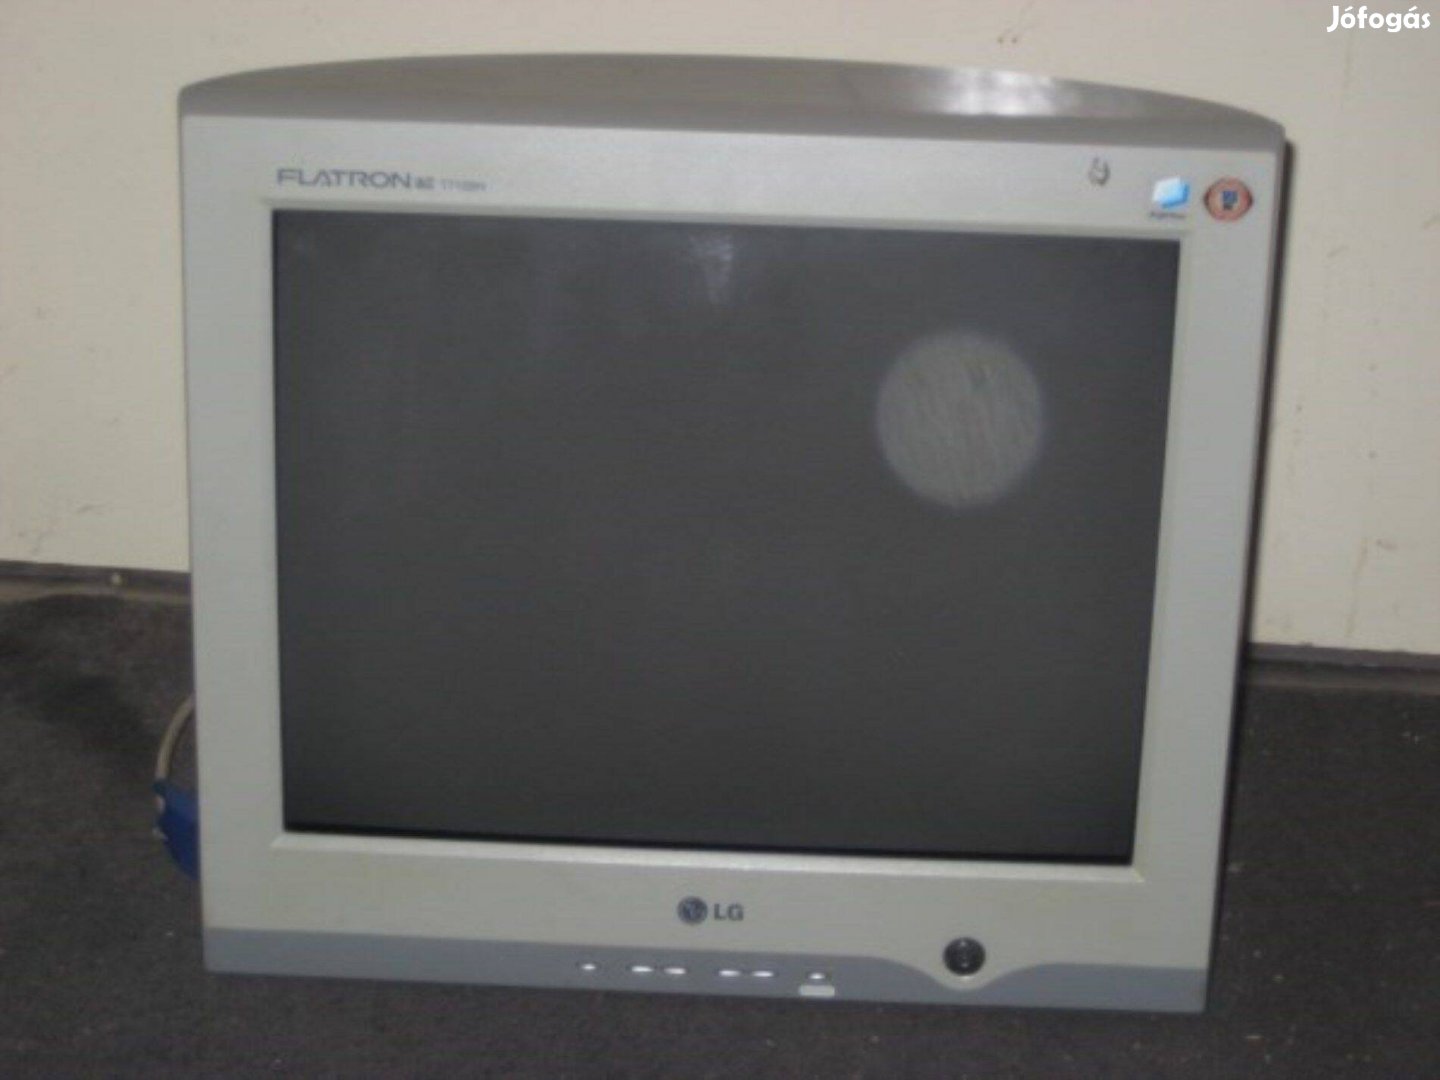 LG Flatron 17" monitor